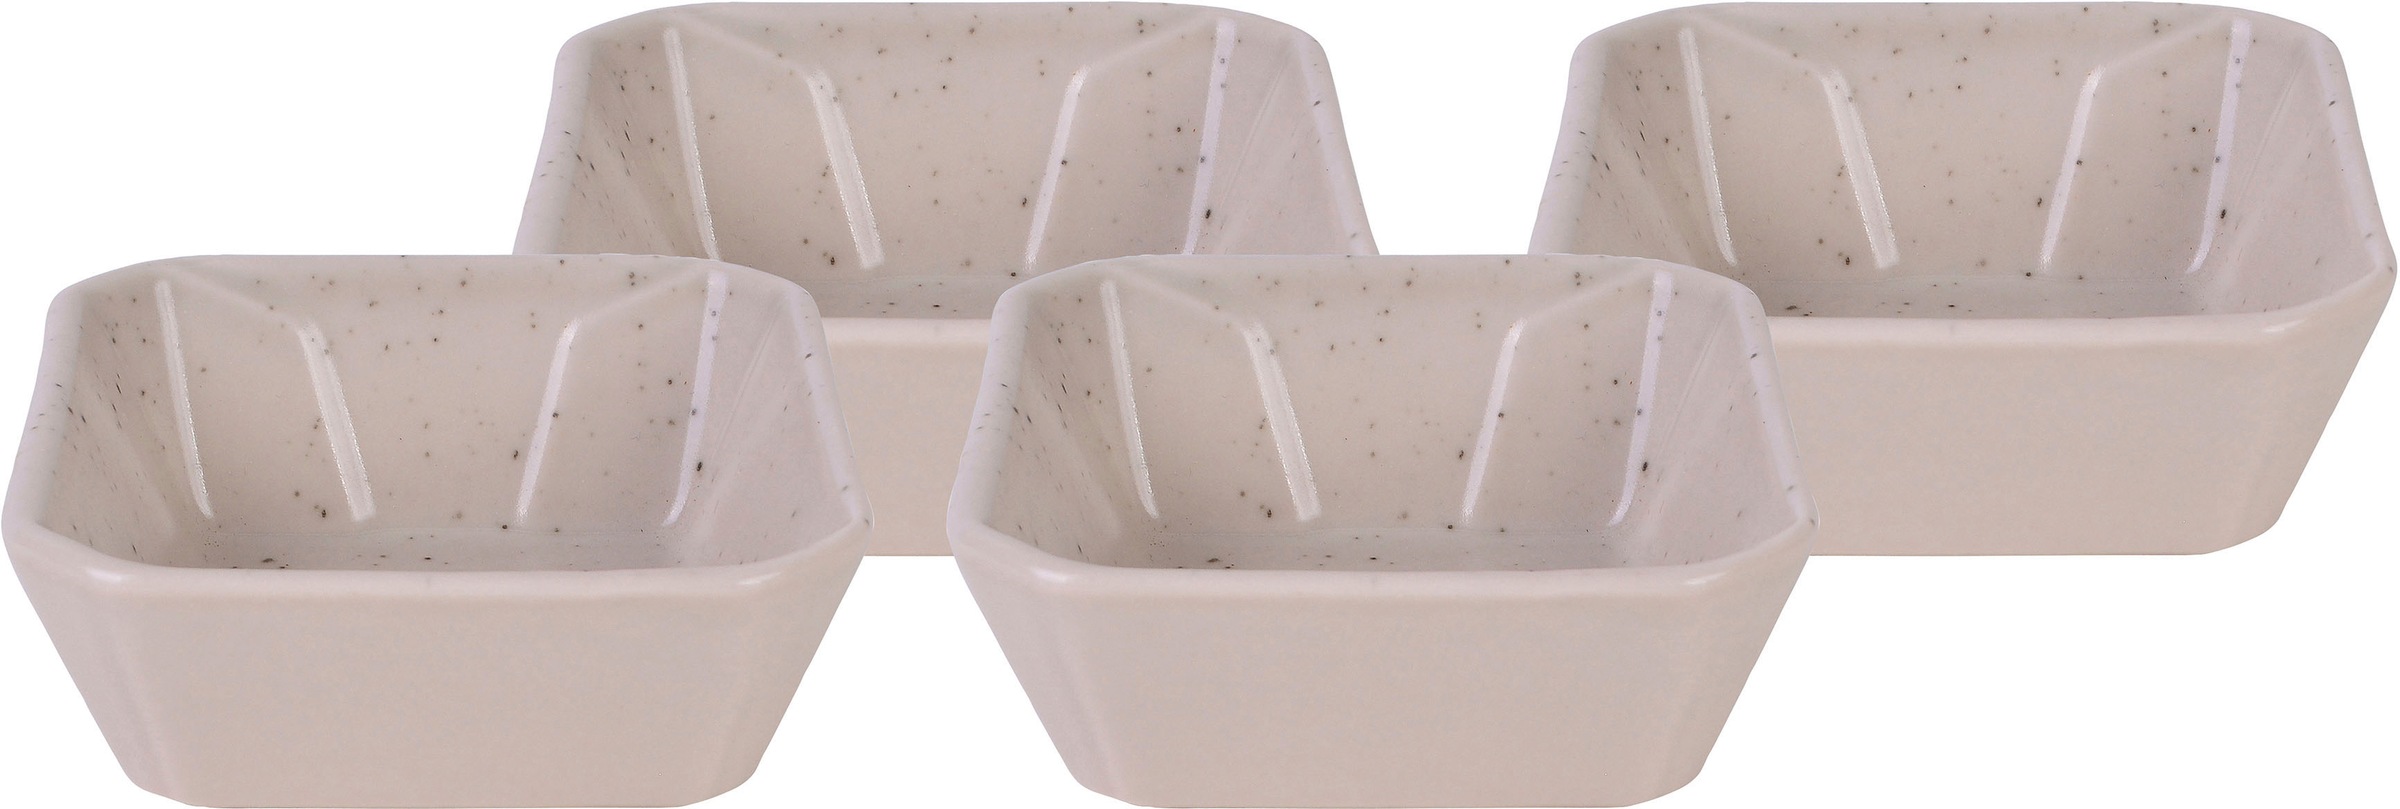 CreaTable Servierschale "Dip Bowl", 4 tlg., aus Steinzeug, Dipschale, Snackschale, Topaktueller „Streat Food“ Trend